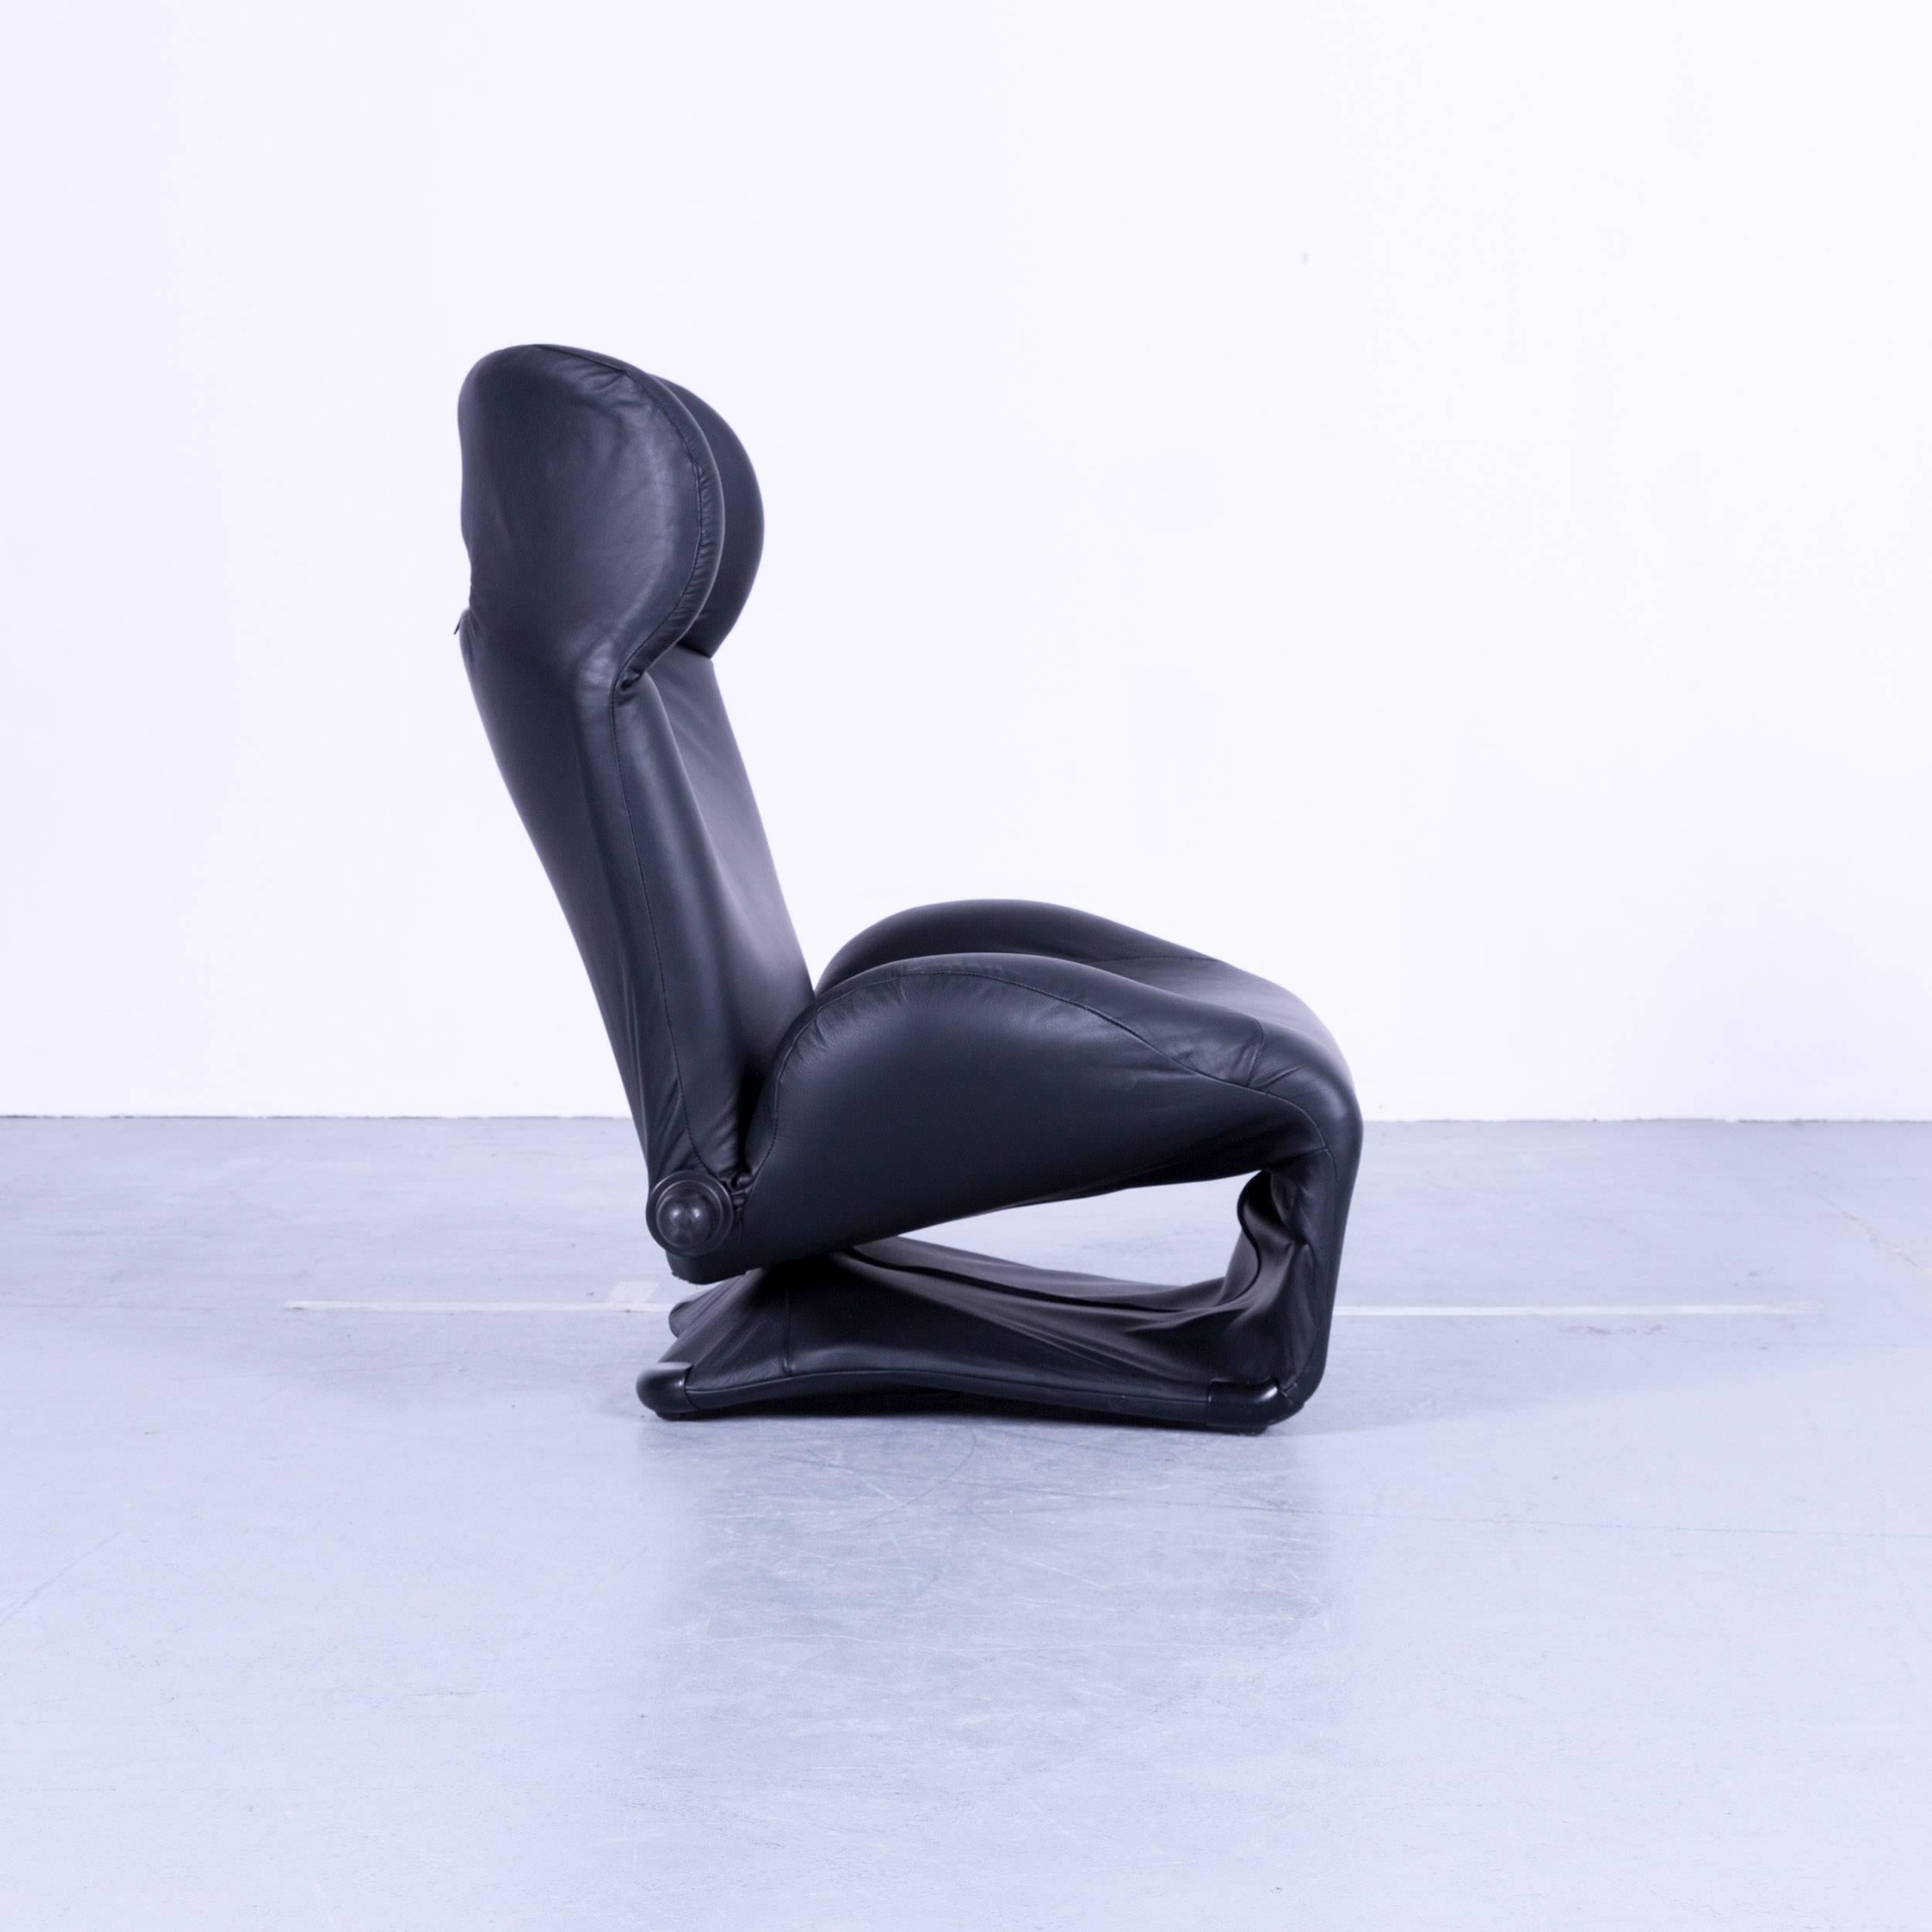 Cassina Wink Designer Chair Black Leather Function Recliner by Toshiyuki Kita 1